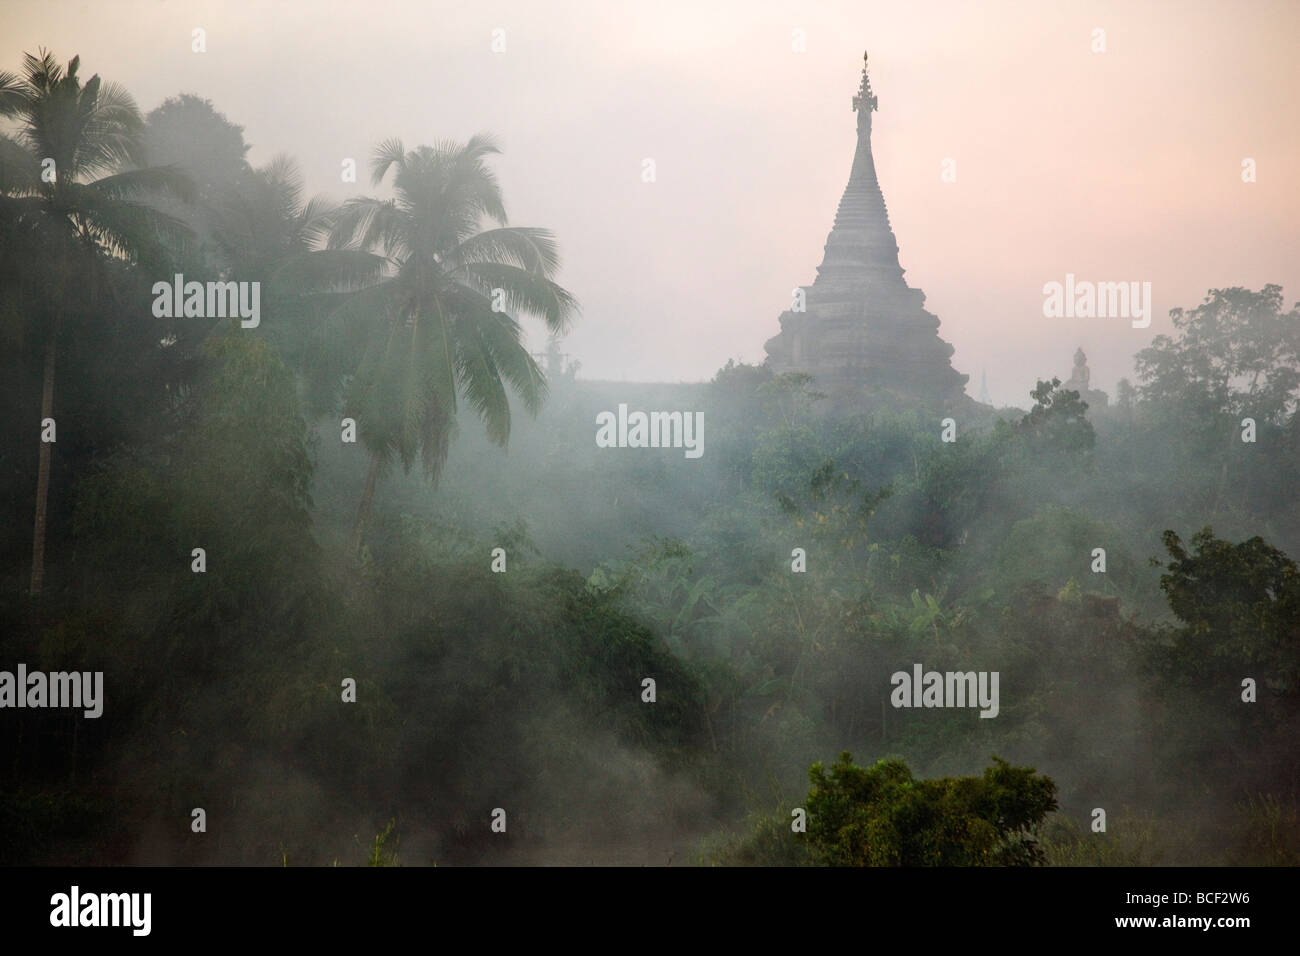 Myanmar, Burma, Mrauk U. Early morning mist shrouds an historic temple of Mrauk U built in the Rakhine style. Stock Photo